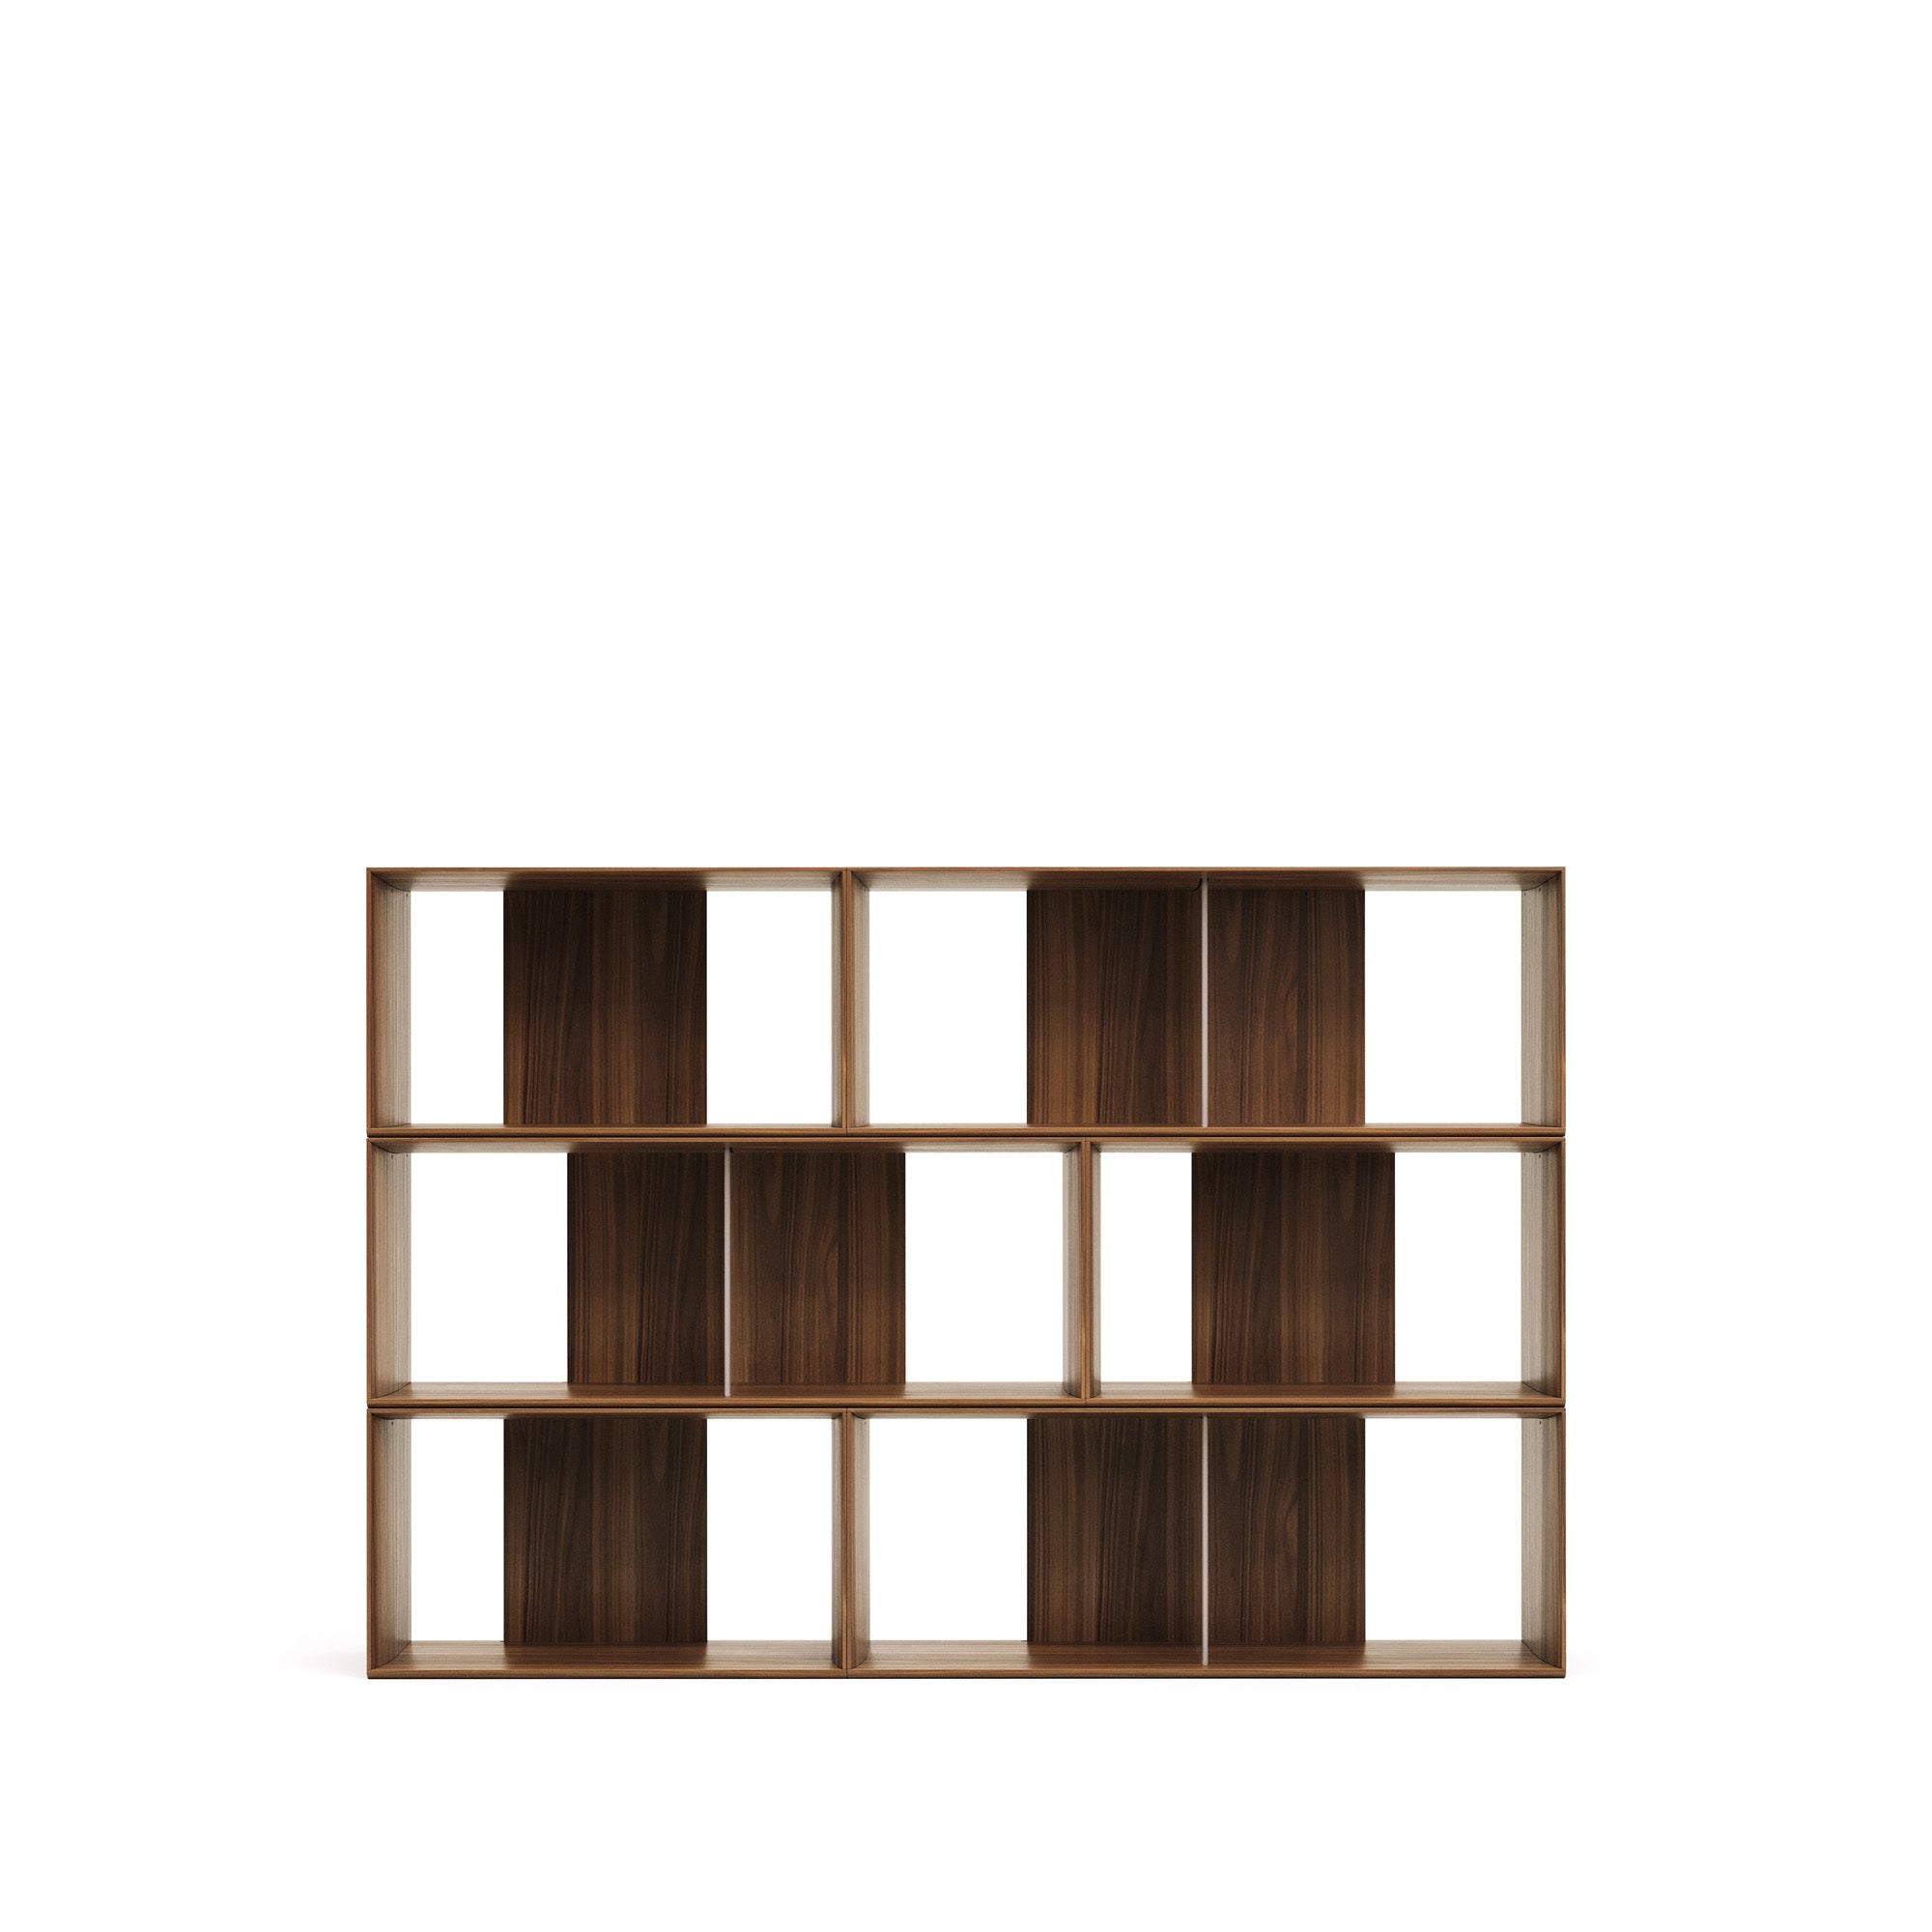 Litto set of 6 modular shelving units in walnut wood veneer, 168 x 114 cm